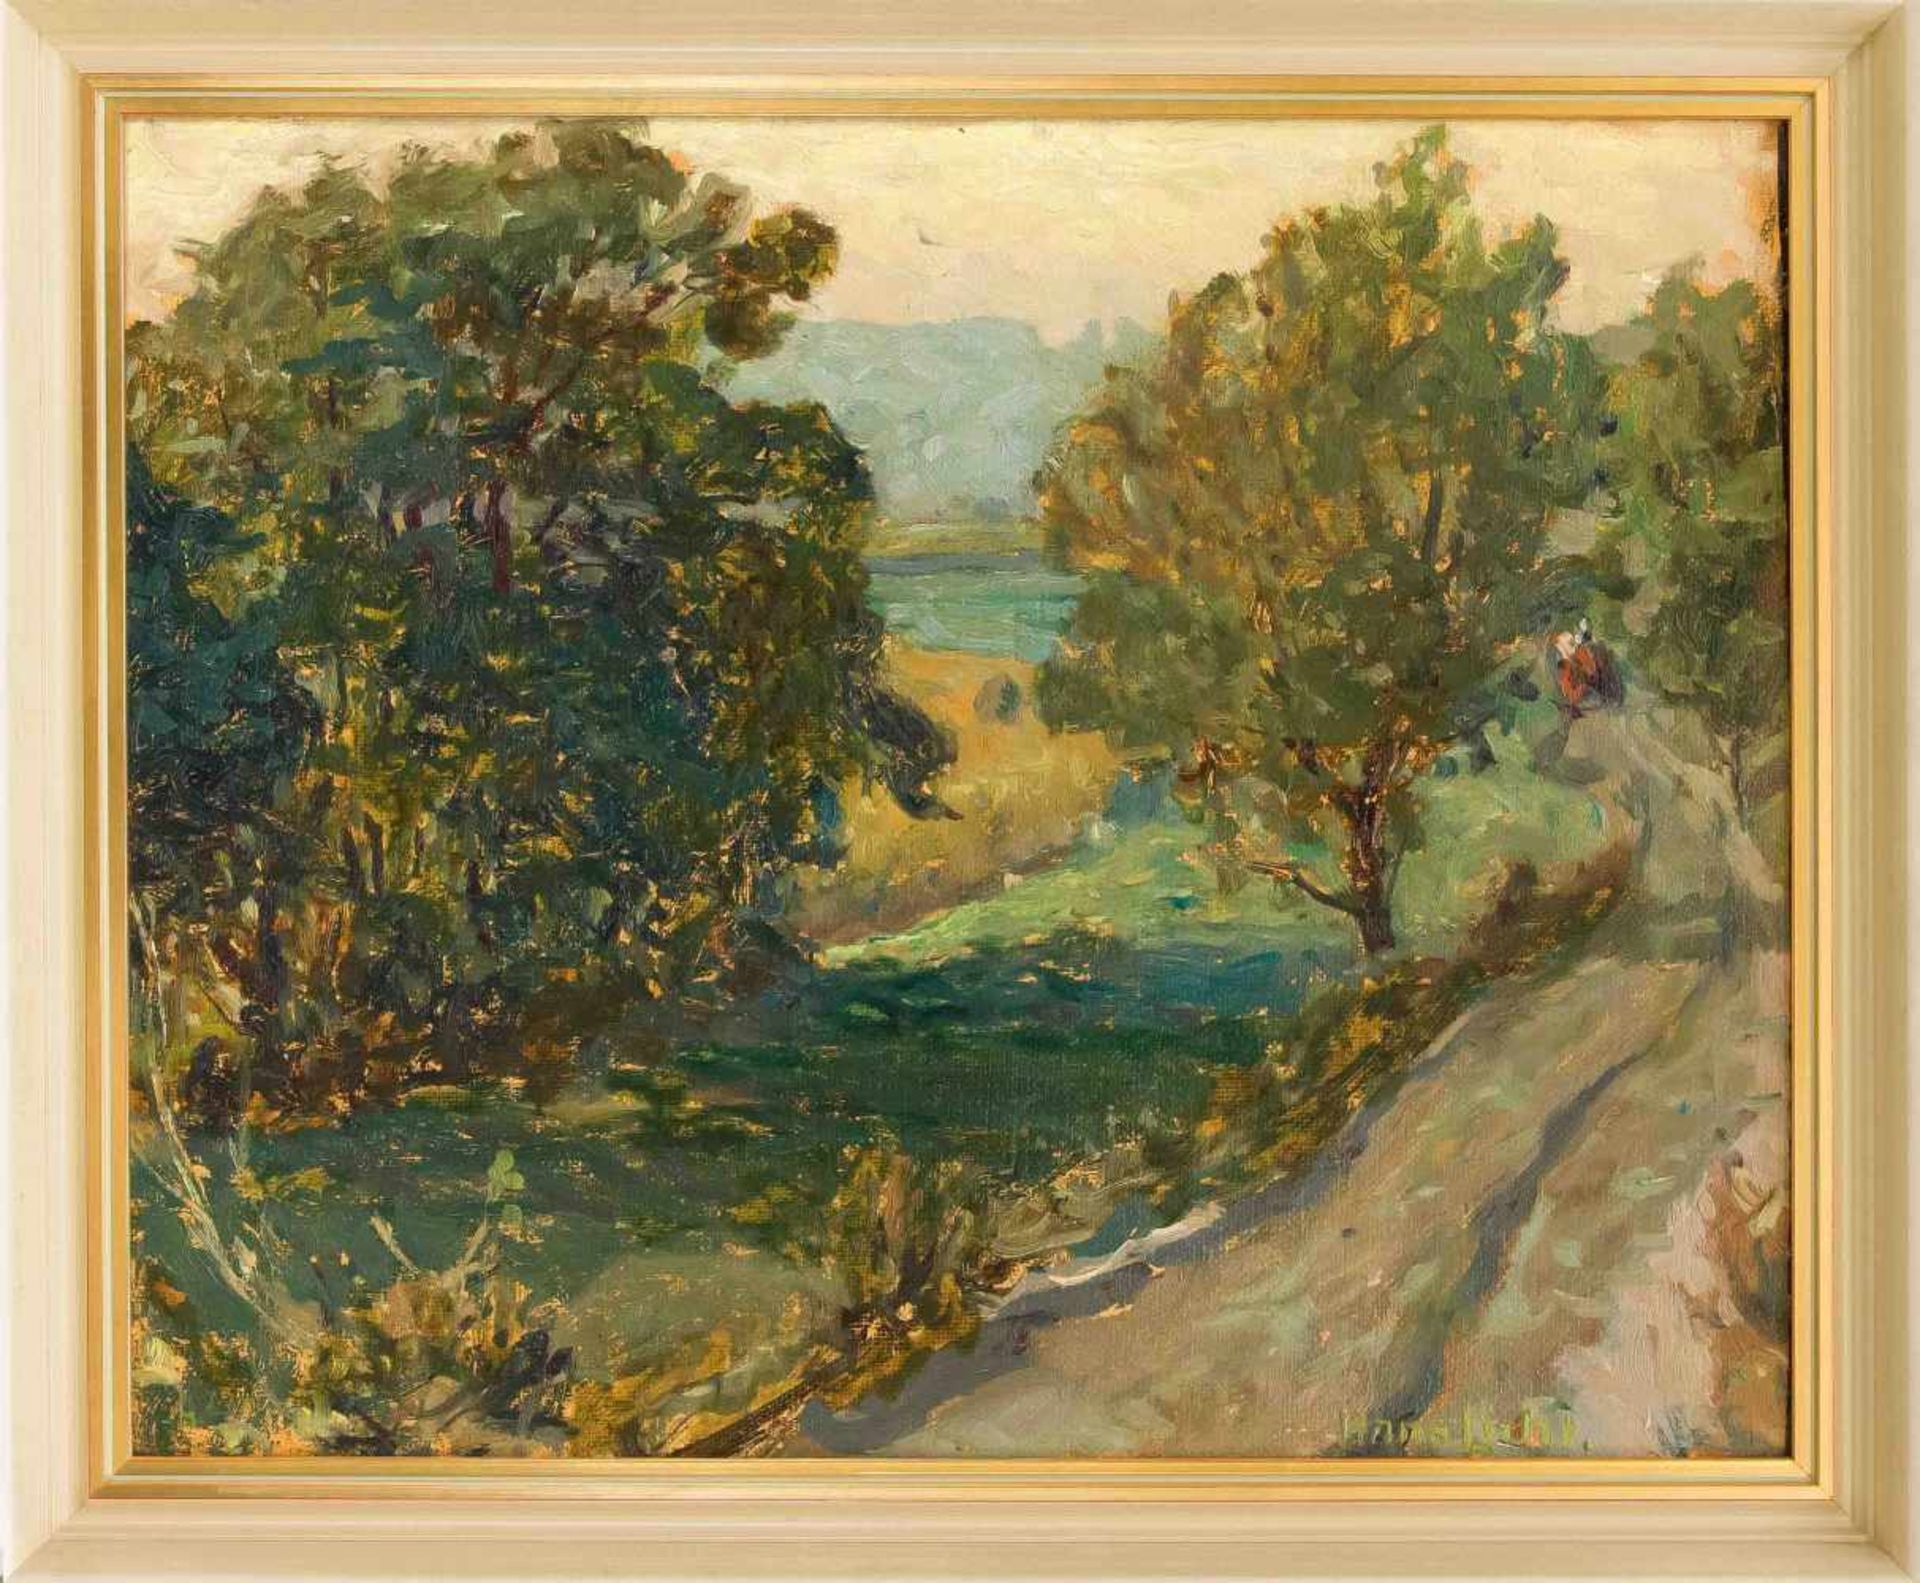 Hans Licht (1876-1935), landscape painter of German impressionism, studied in BerlinBracht and